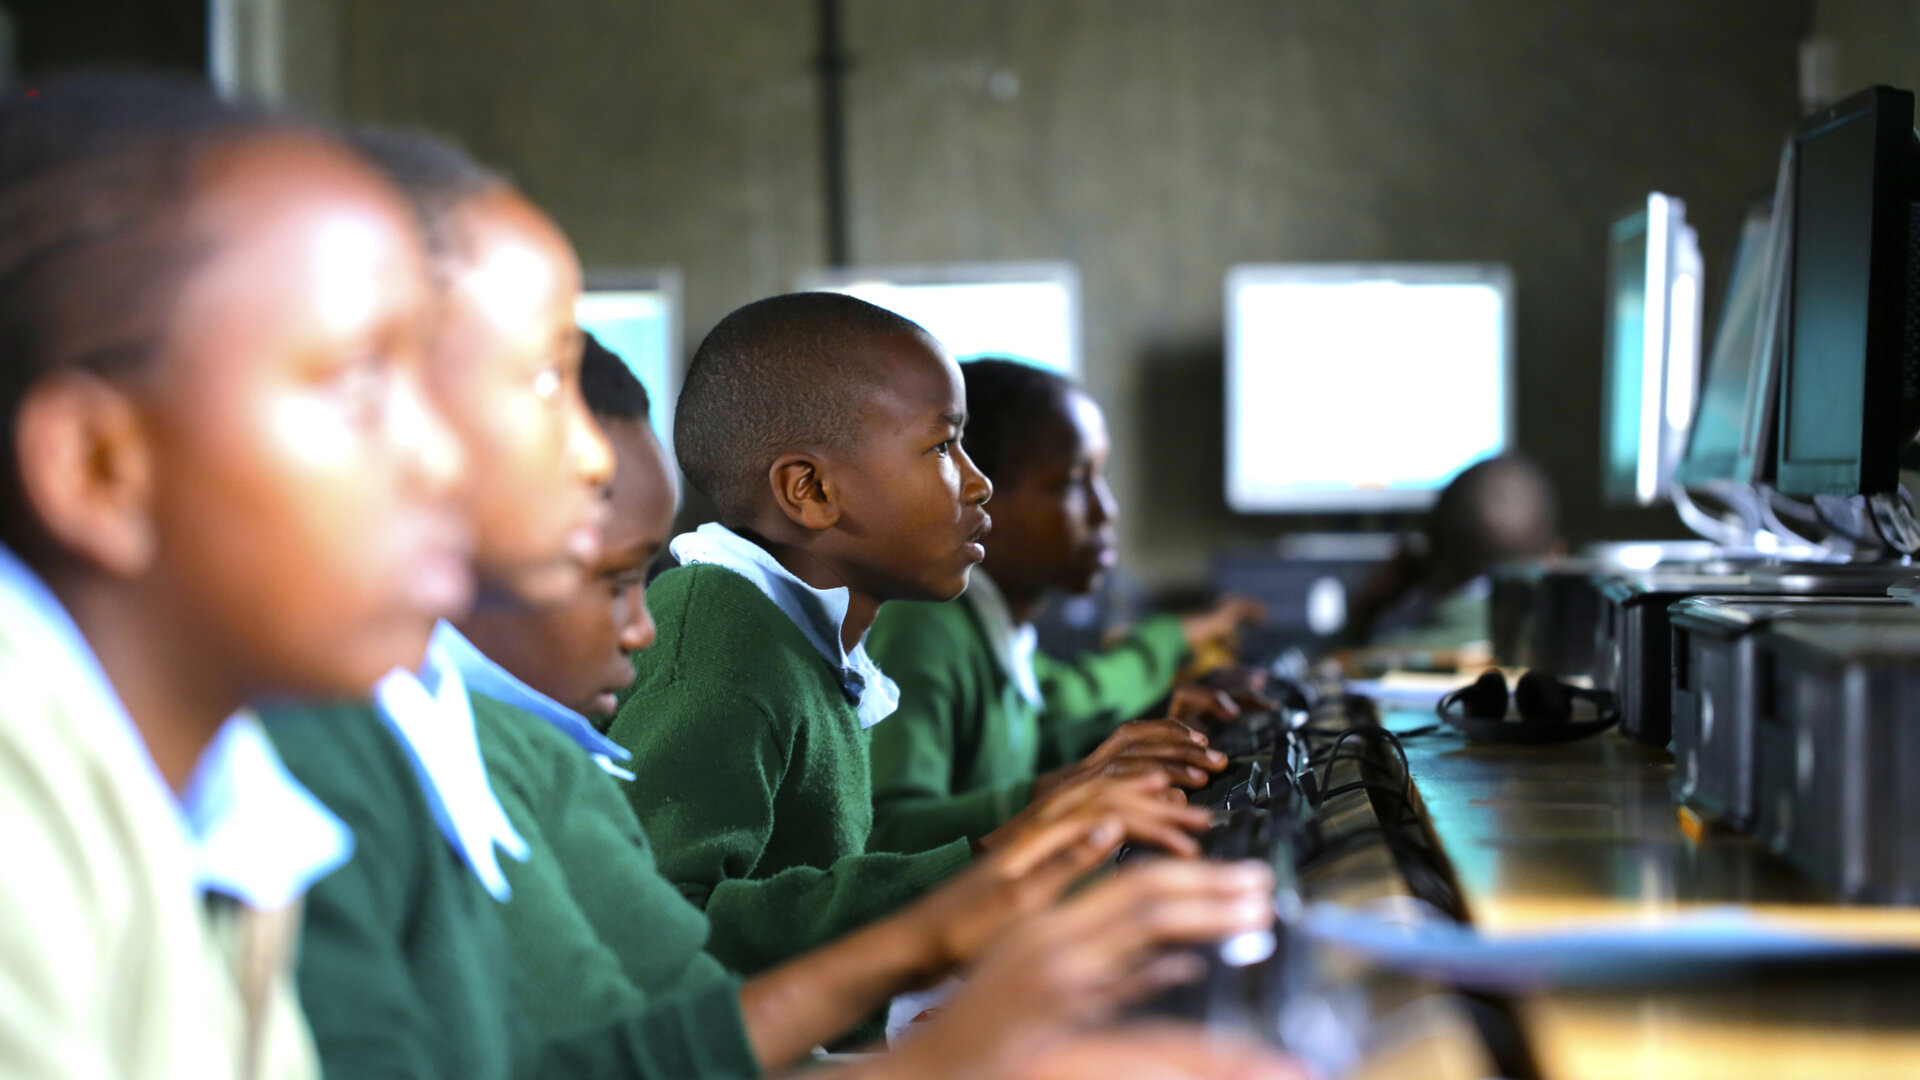 ECO: bringing more schools and communities online in Africa